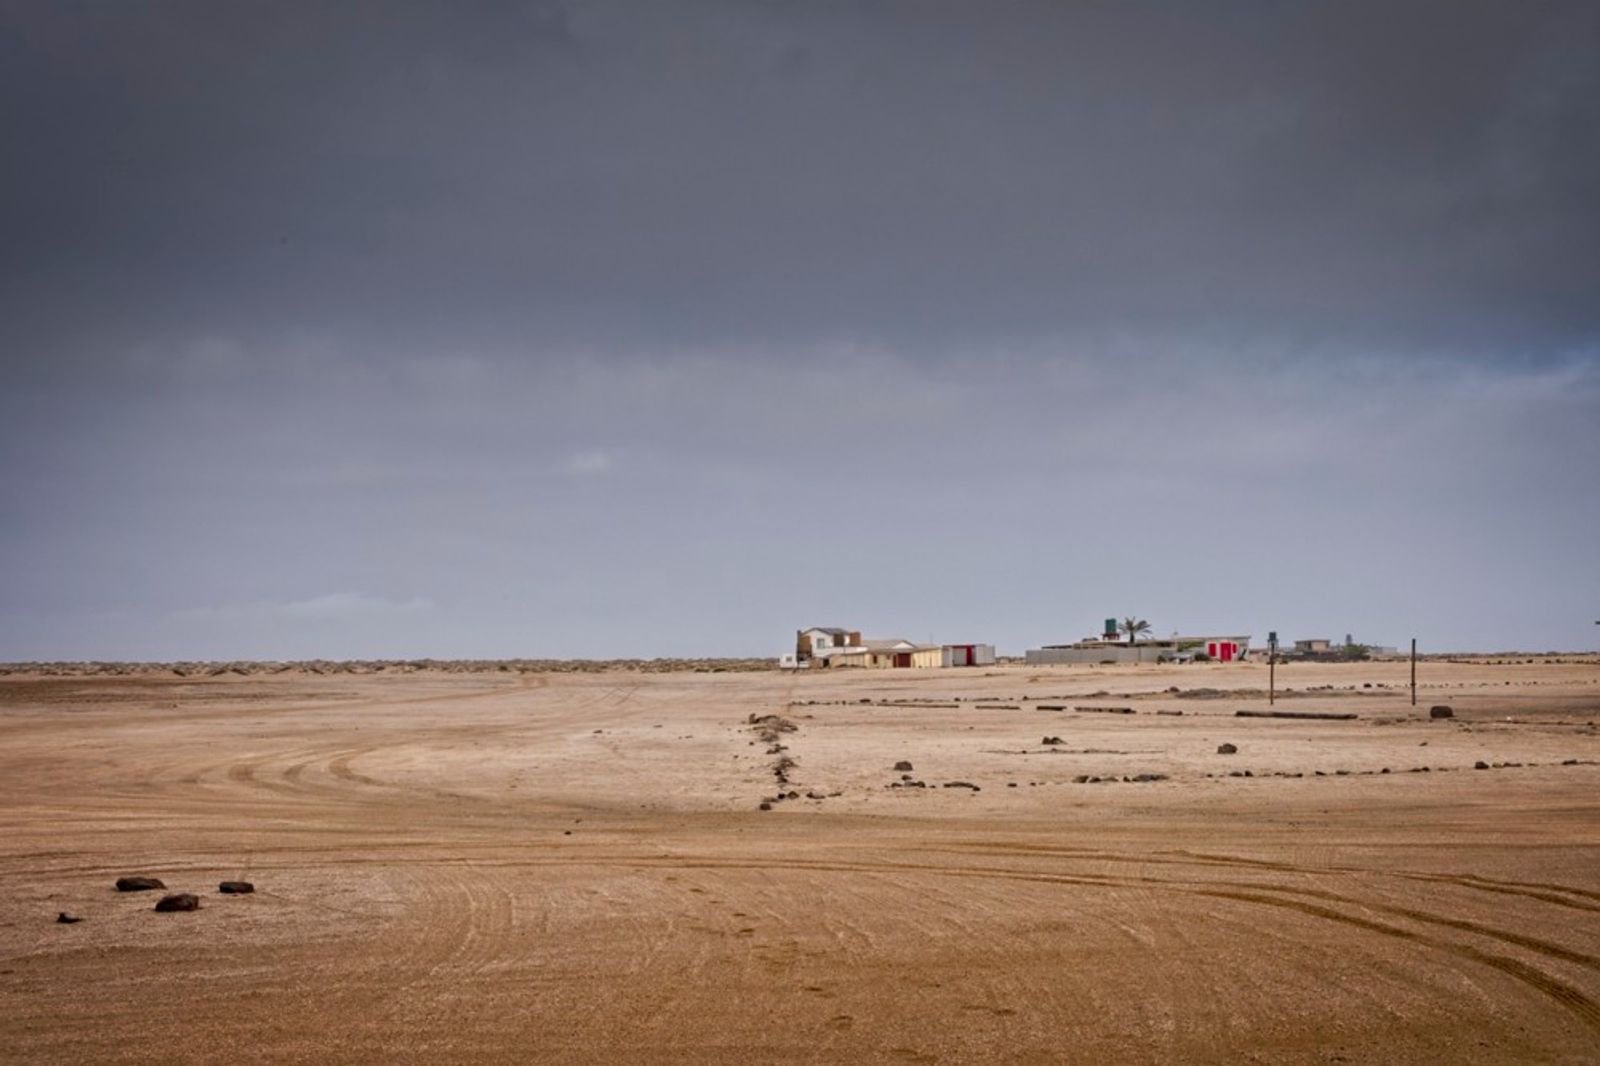 © Harris Steinman - Image from the Wlotzkasbaken, Namibia photography project